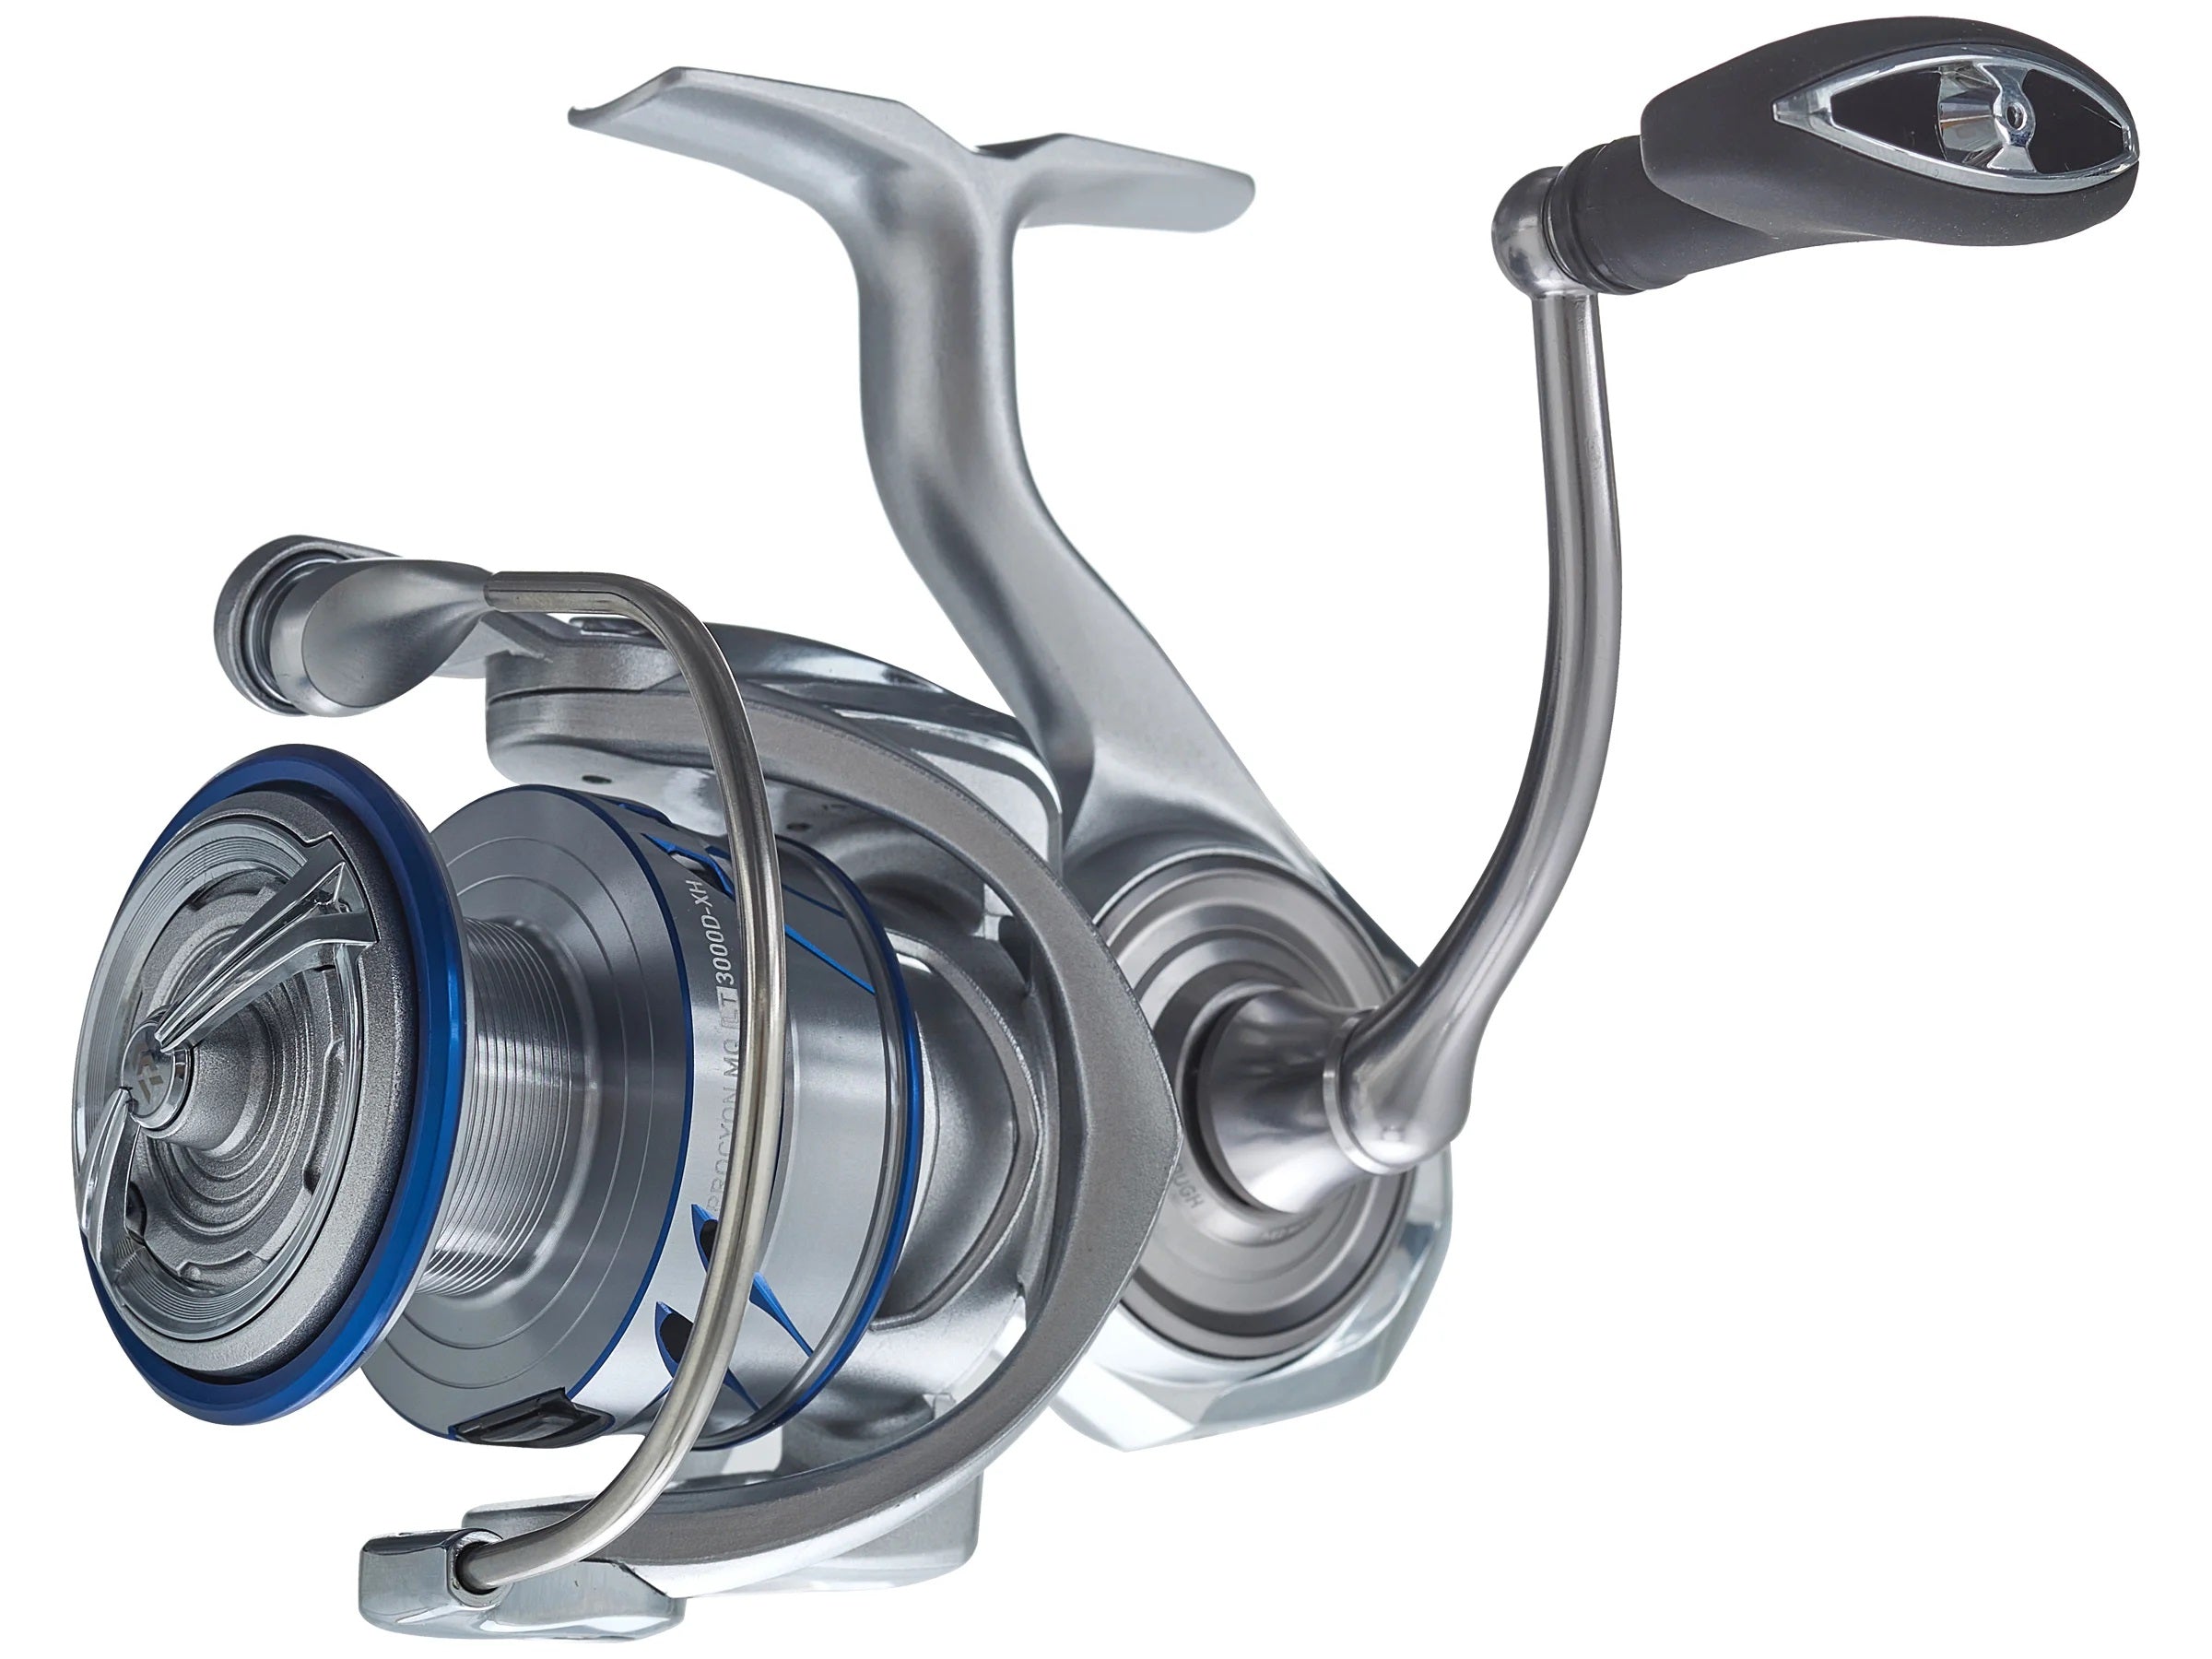 Fishing Reel DAIWA Regal MX 4000 Spinning Reel at best price in